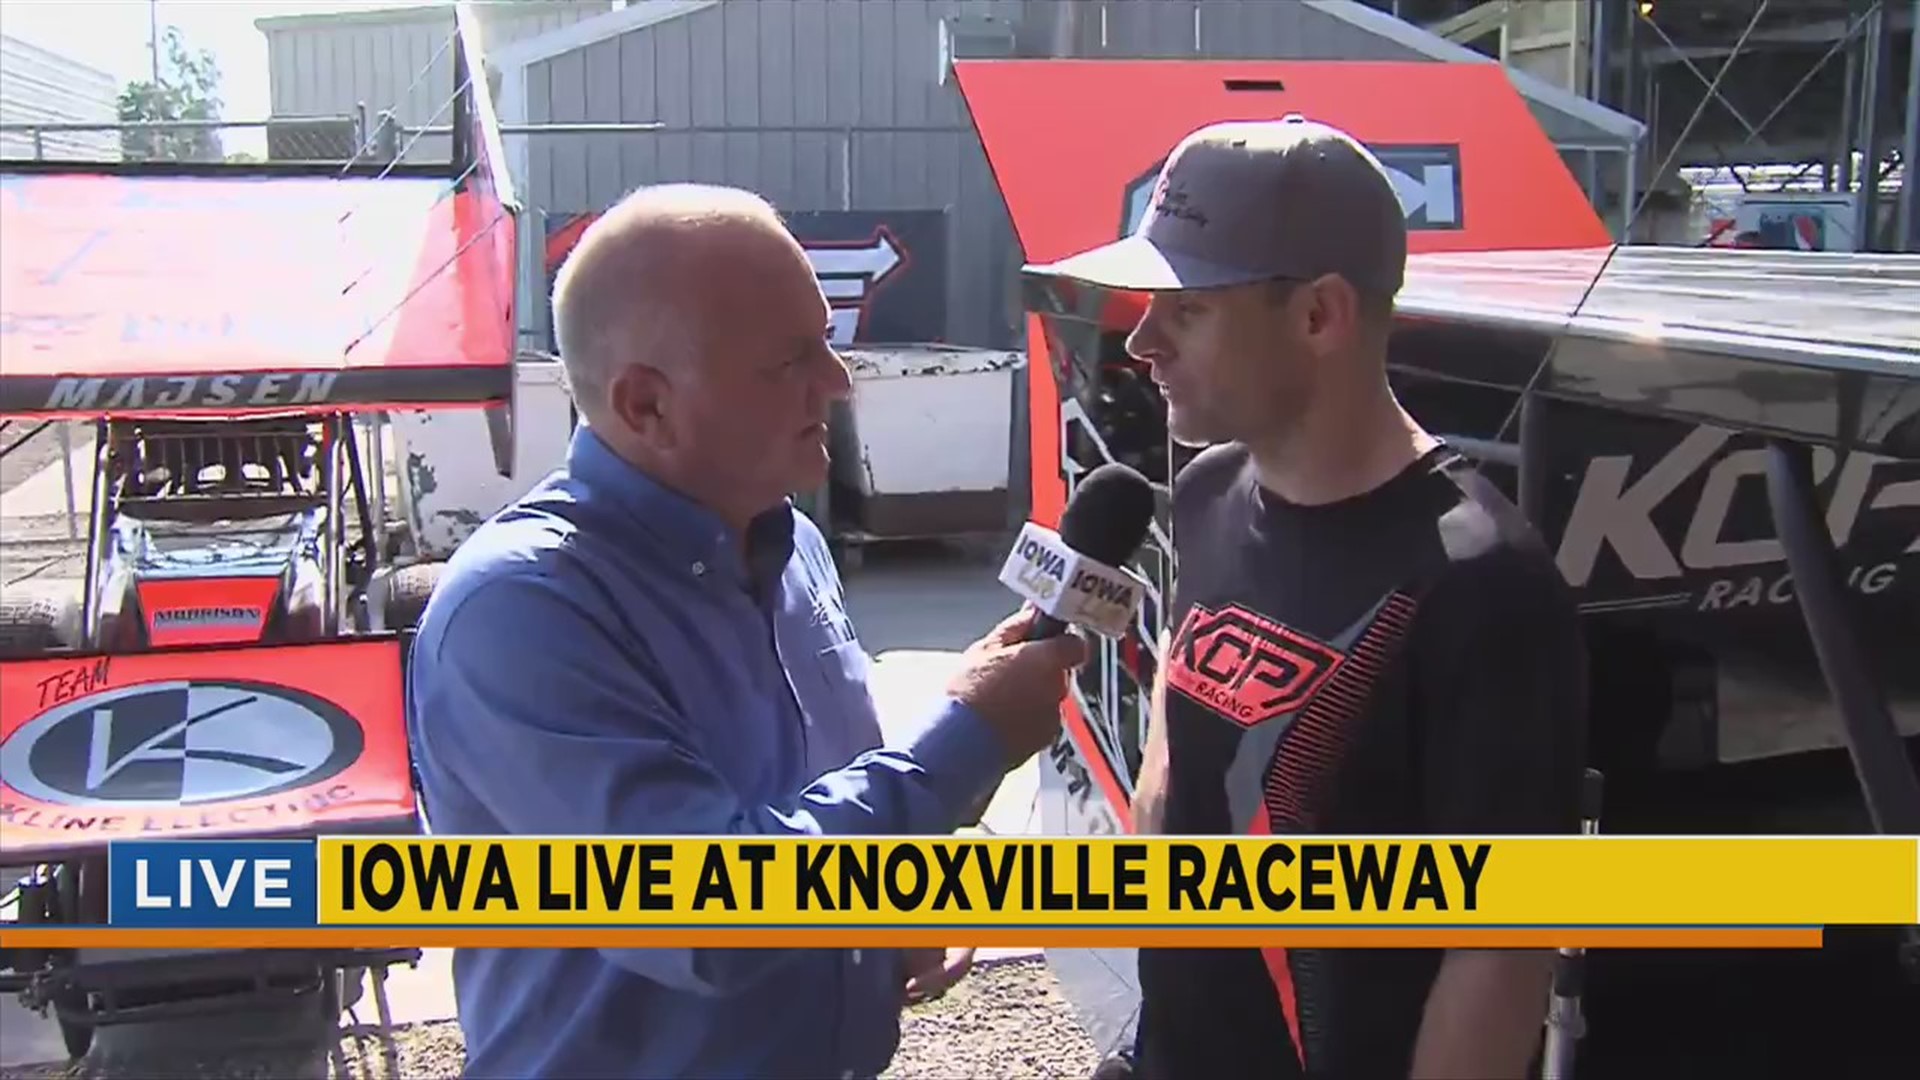 Knoxville Raceway - The Superbowl of Sprint Car Racing